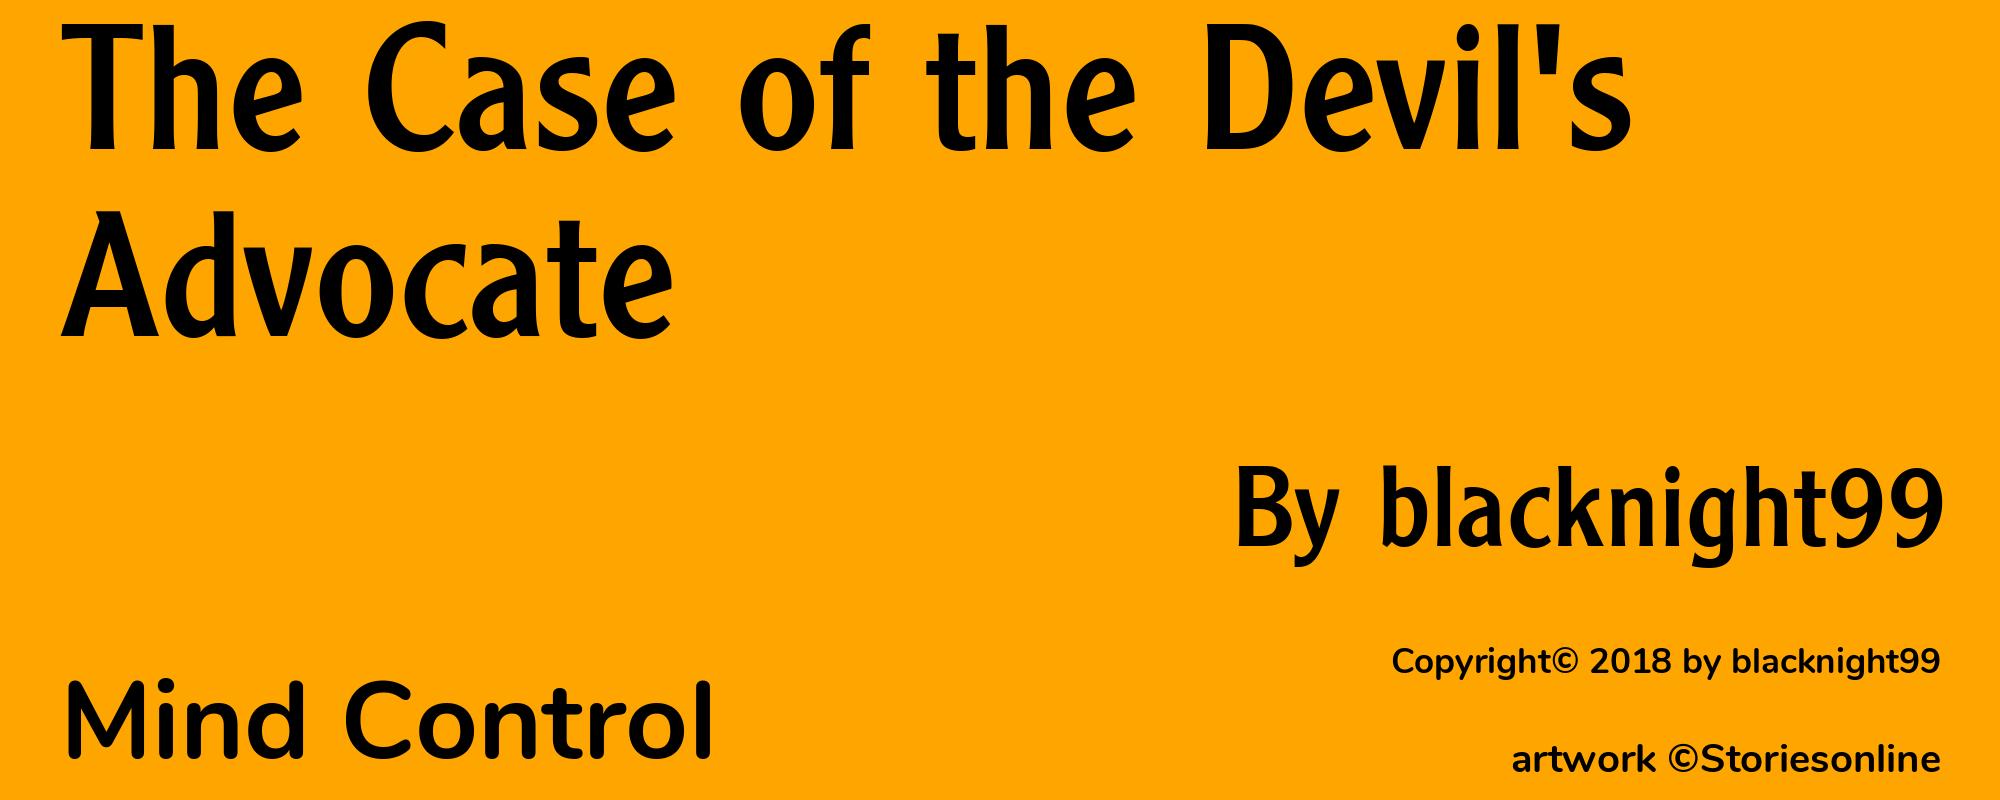 The Case of the Devil's Advocate - Cover